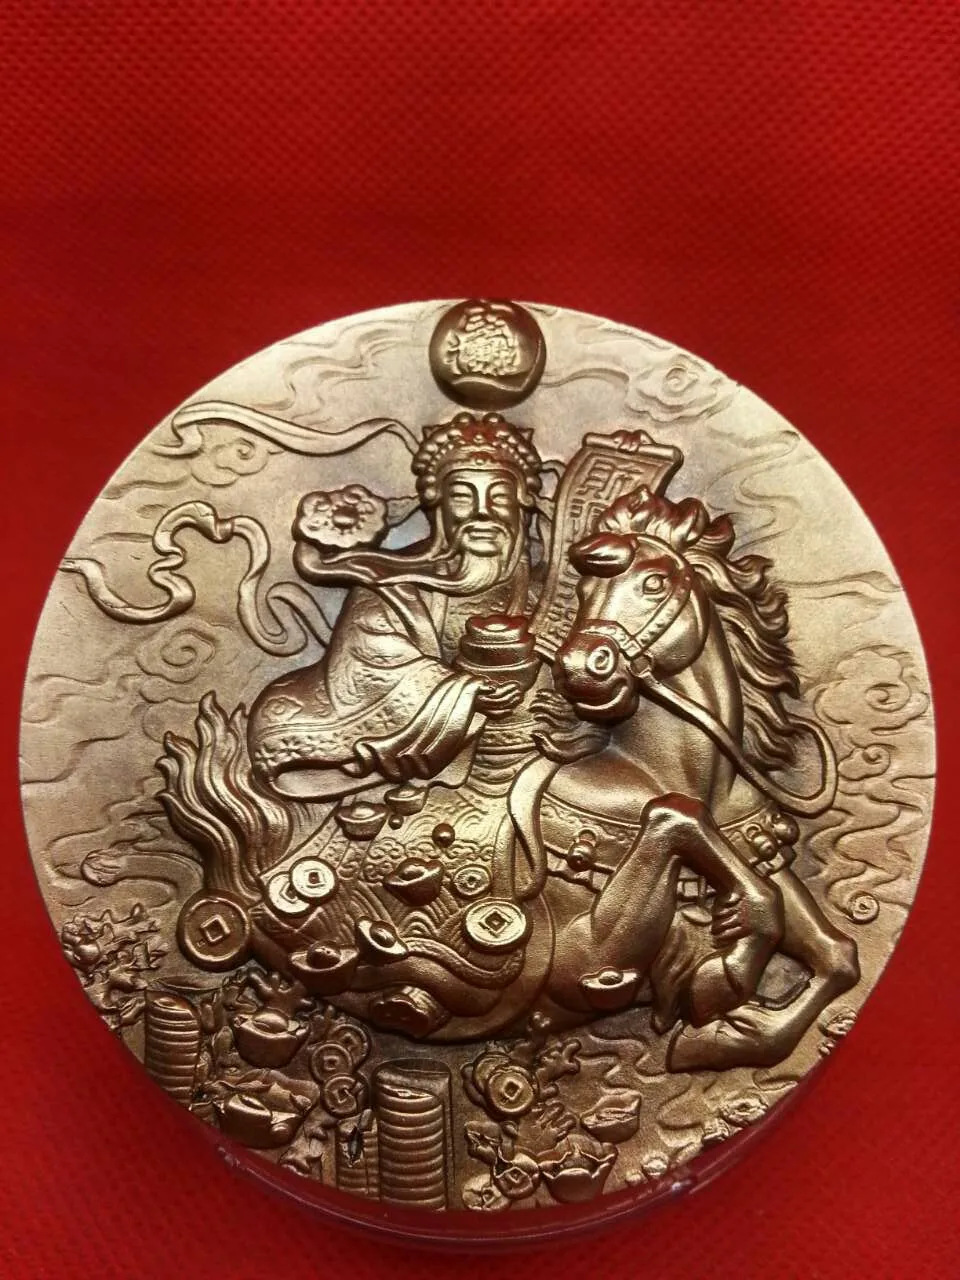 80 мм Caishen Civil Бог богатства бронзовая медаль